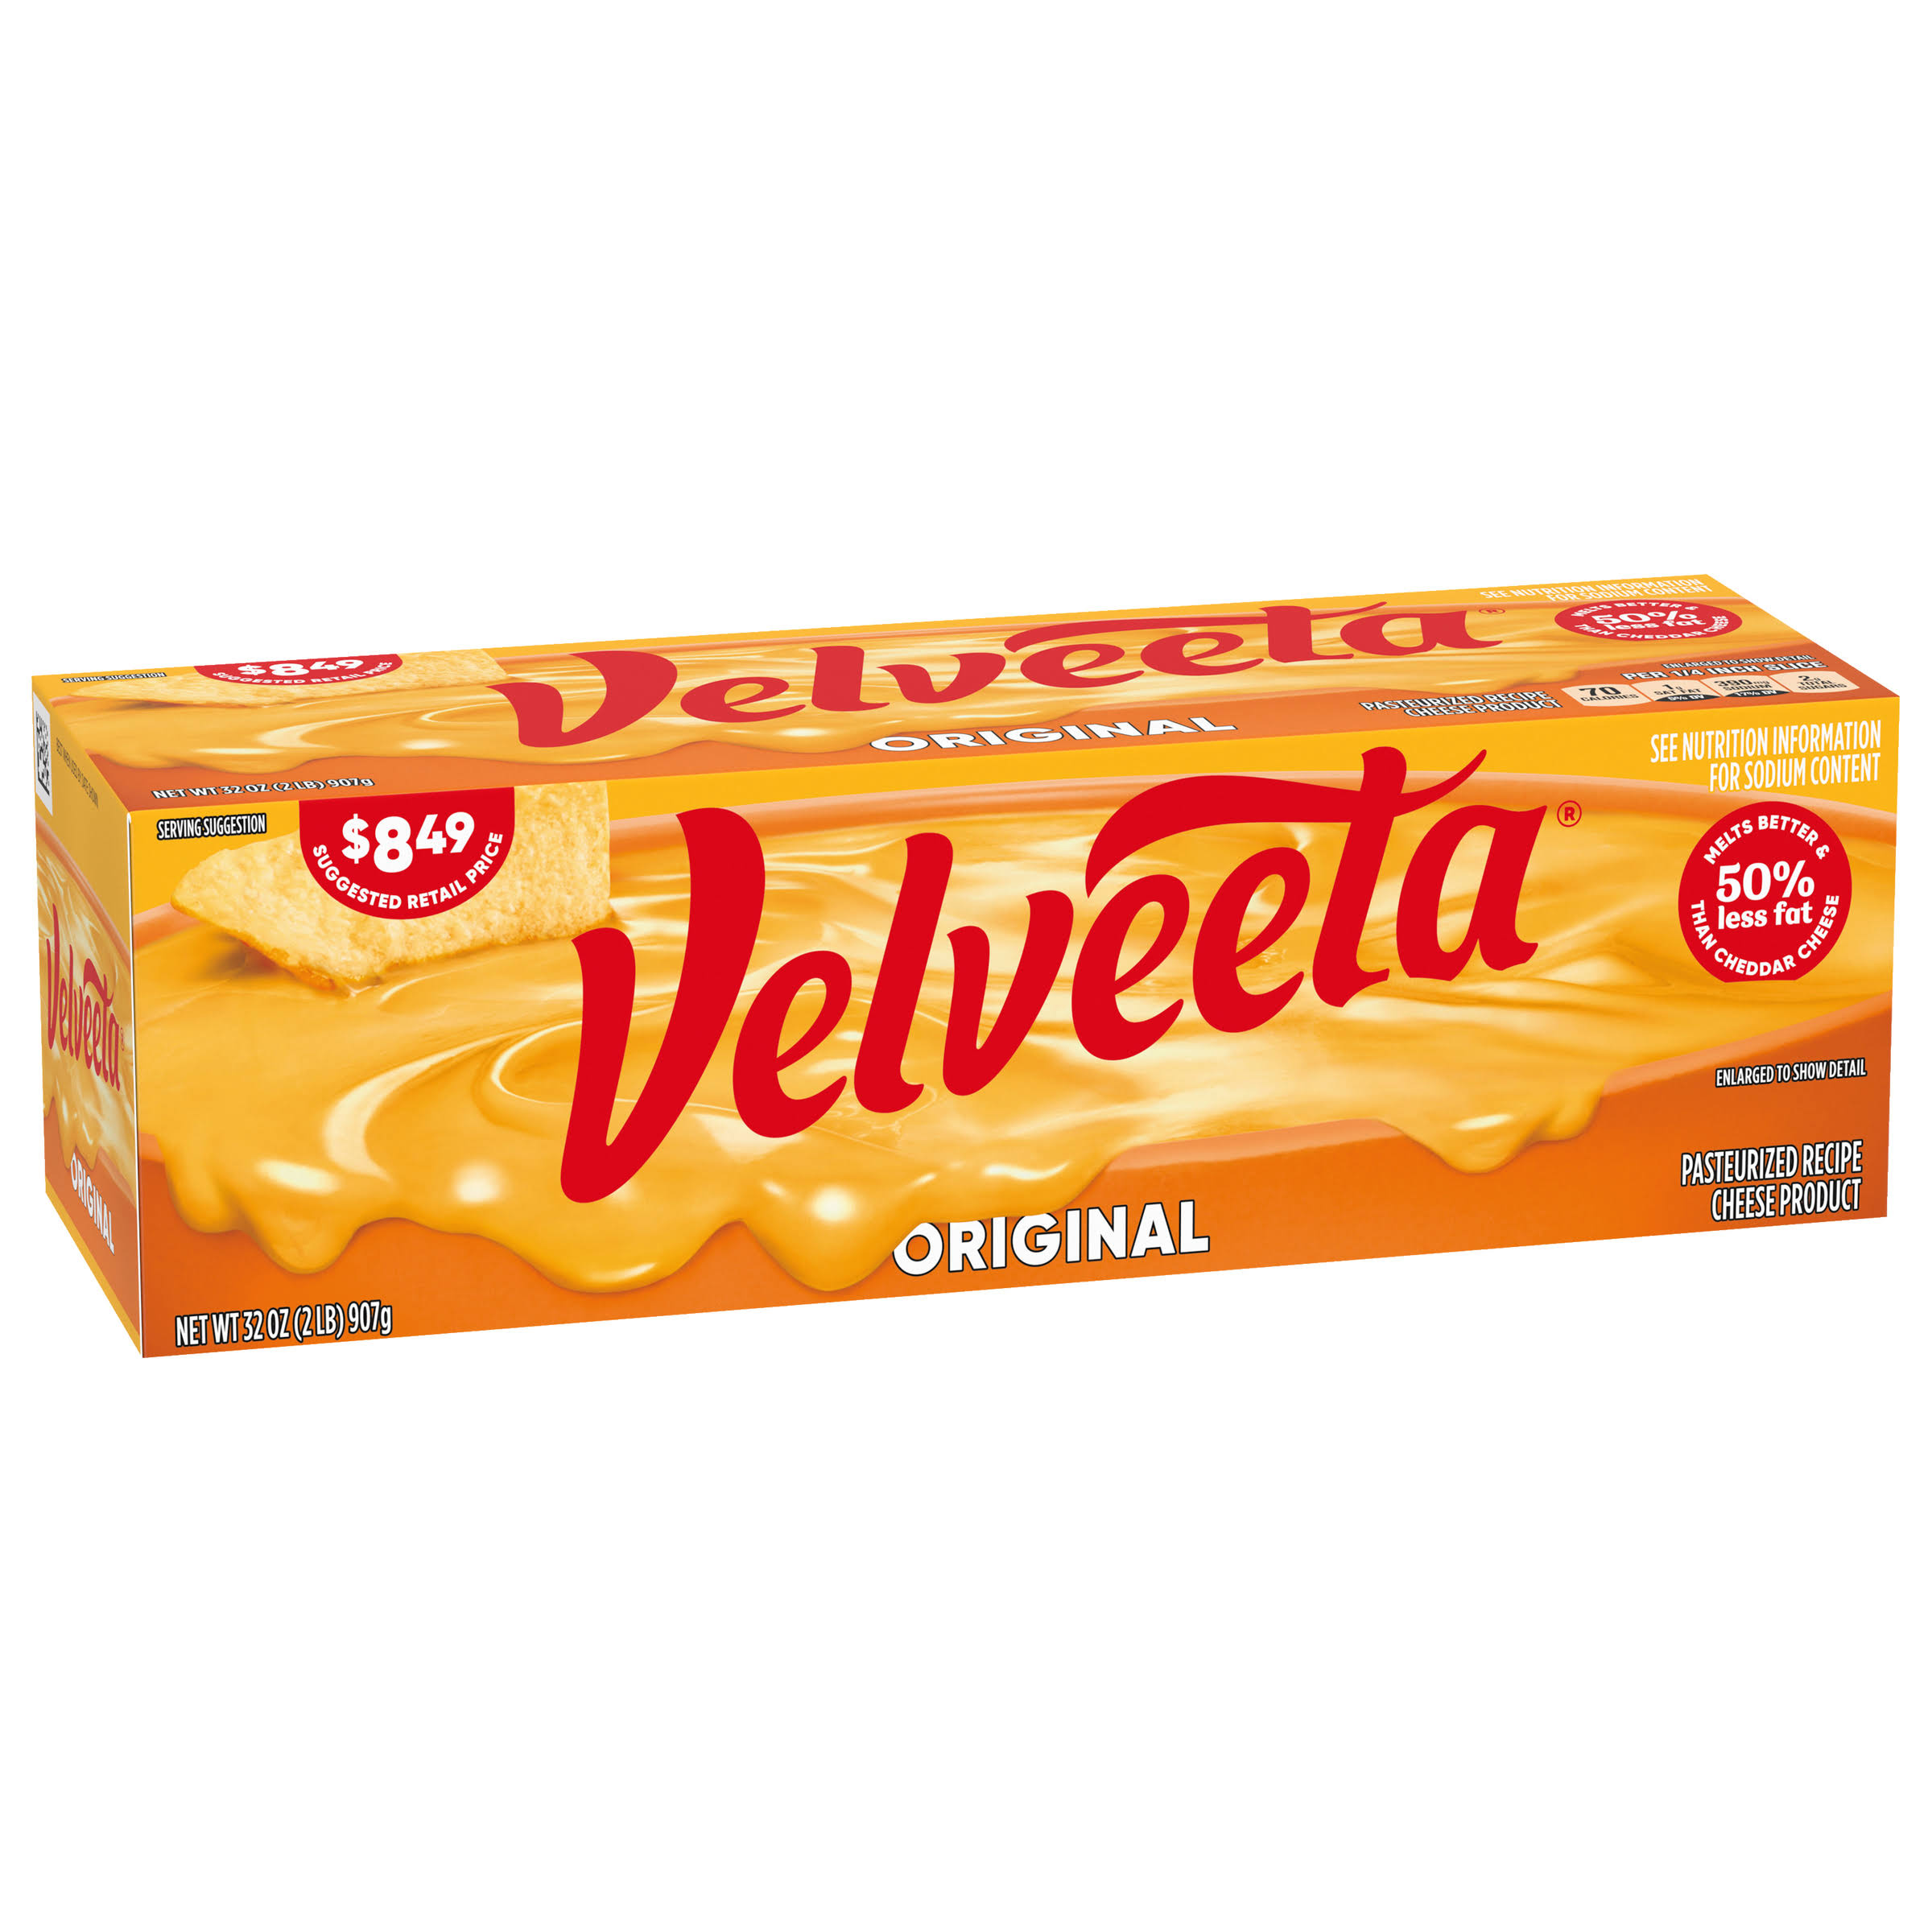 VELVEETA Cheese Product, Original - 32 oz